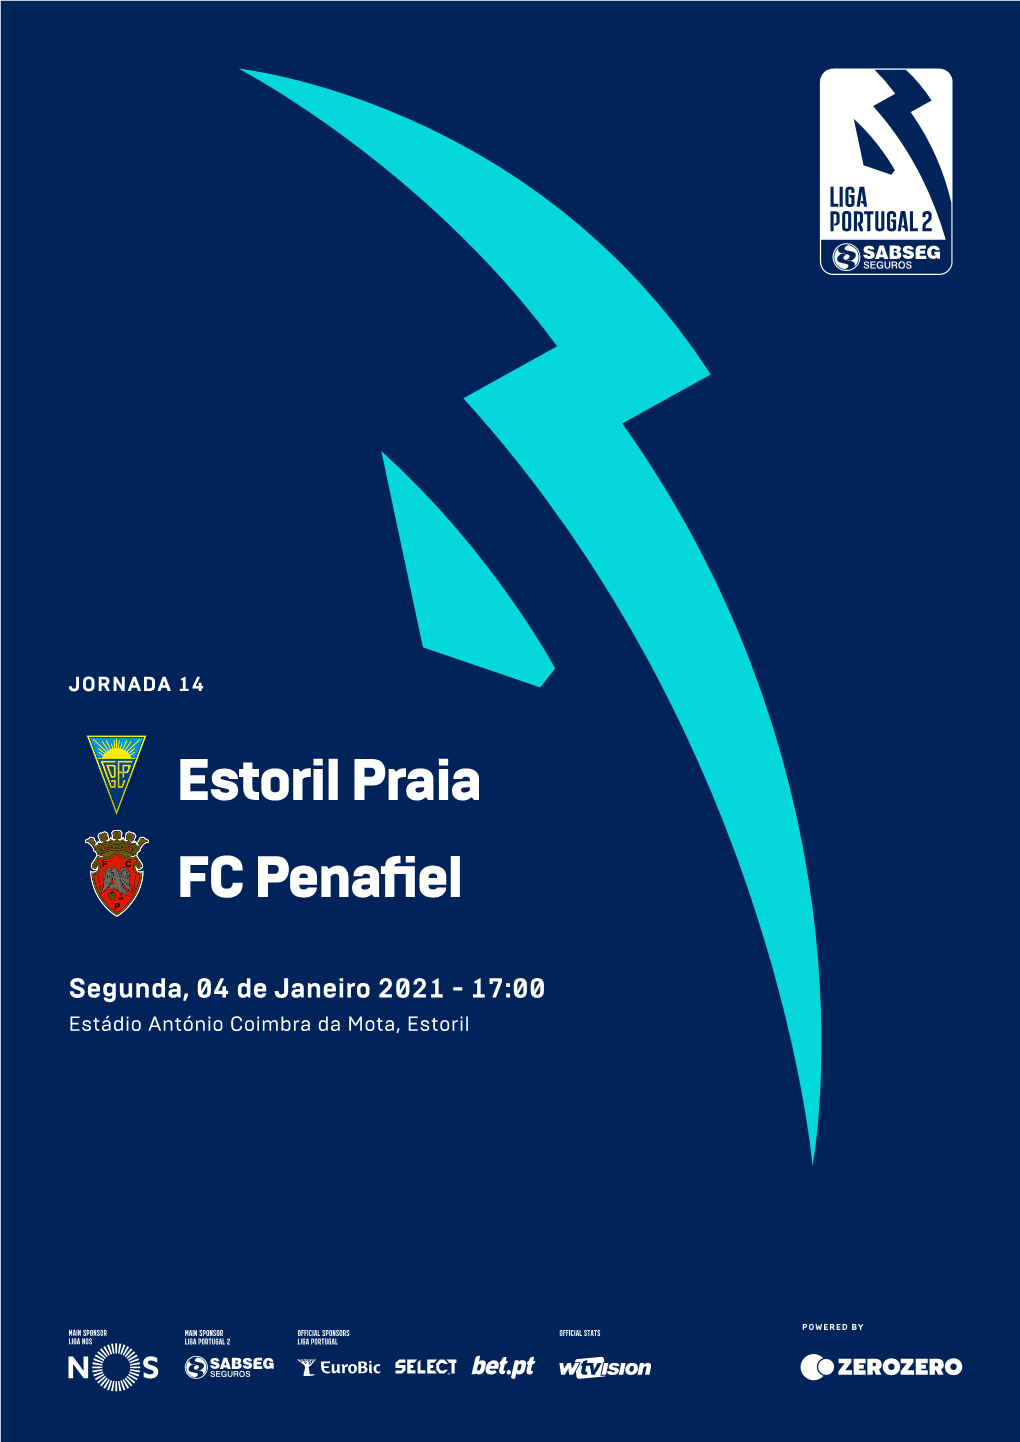 Estoril Praia FC Penafiel